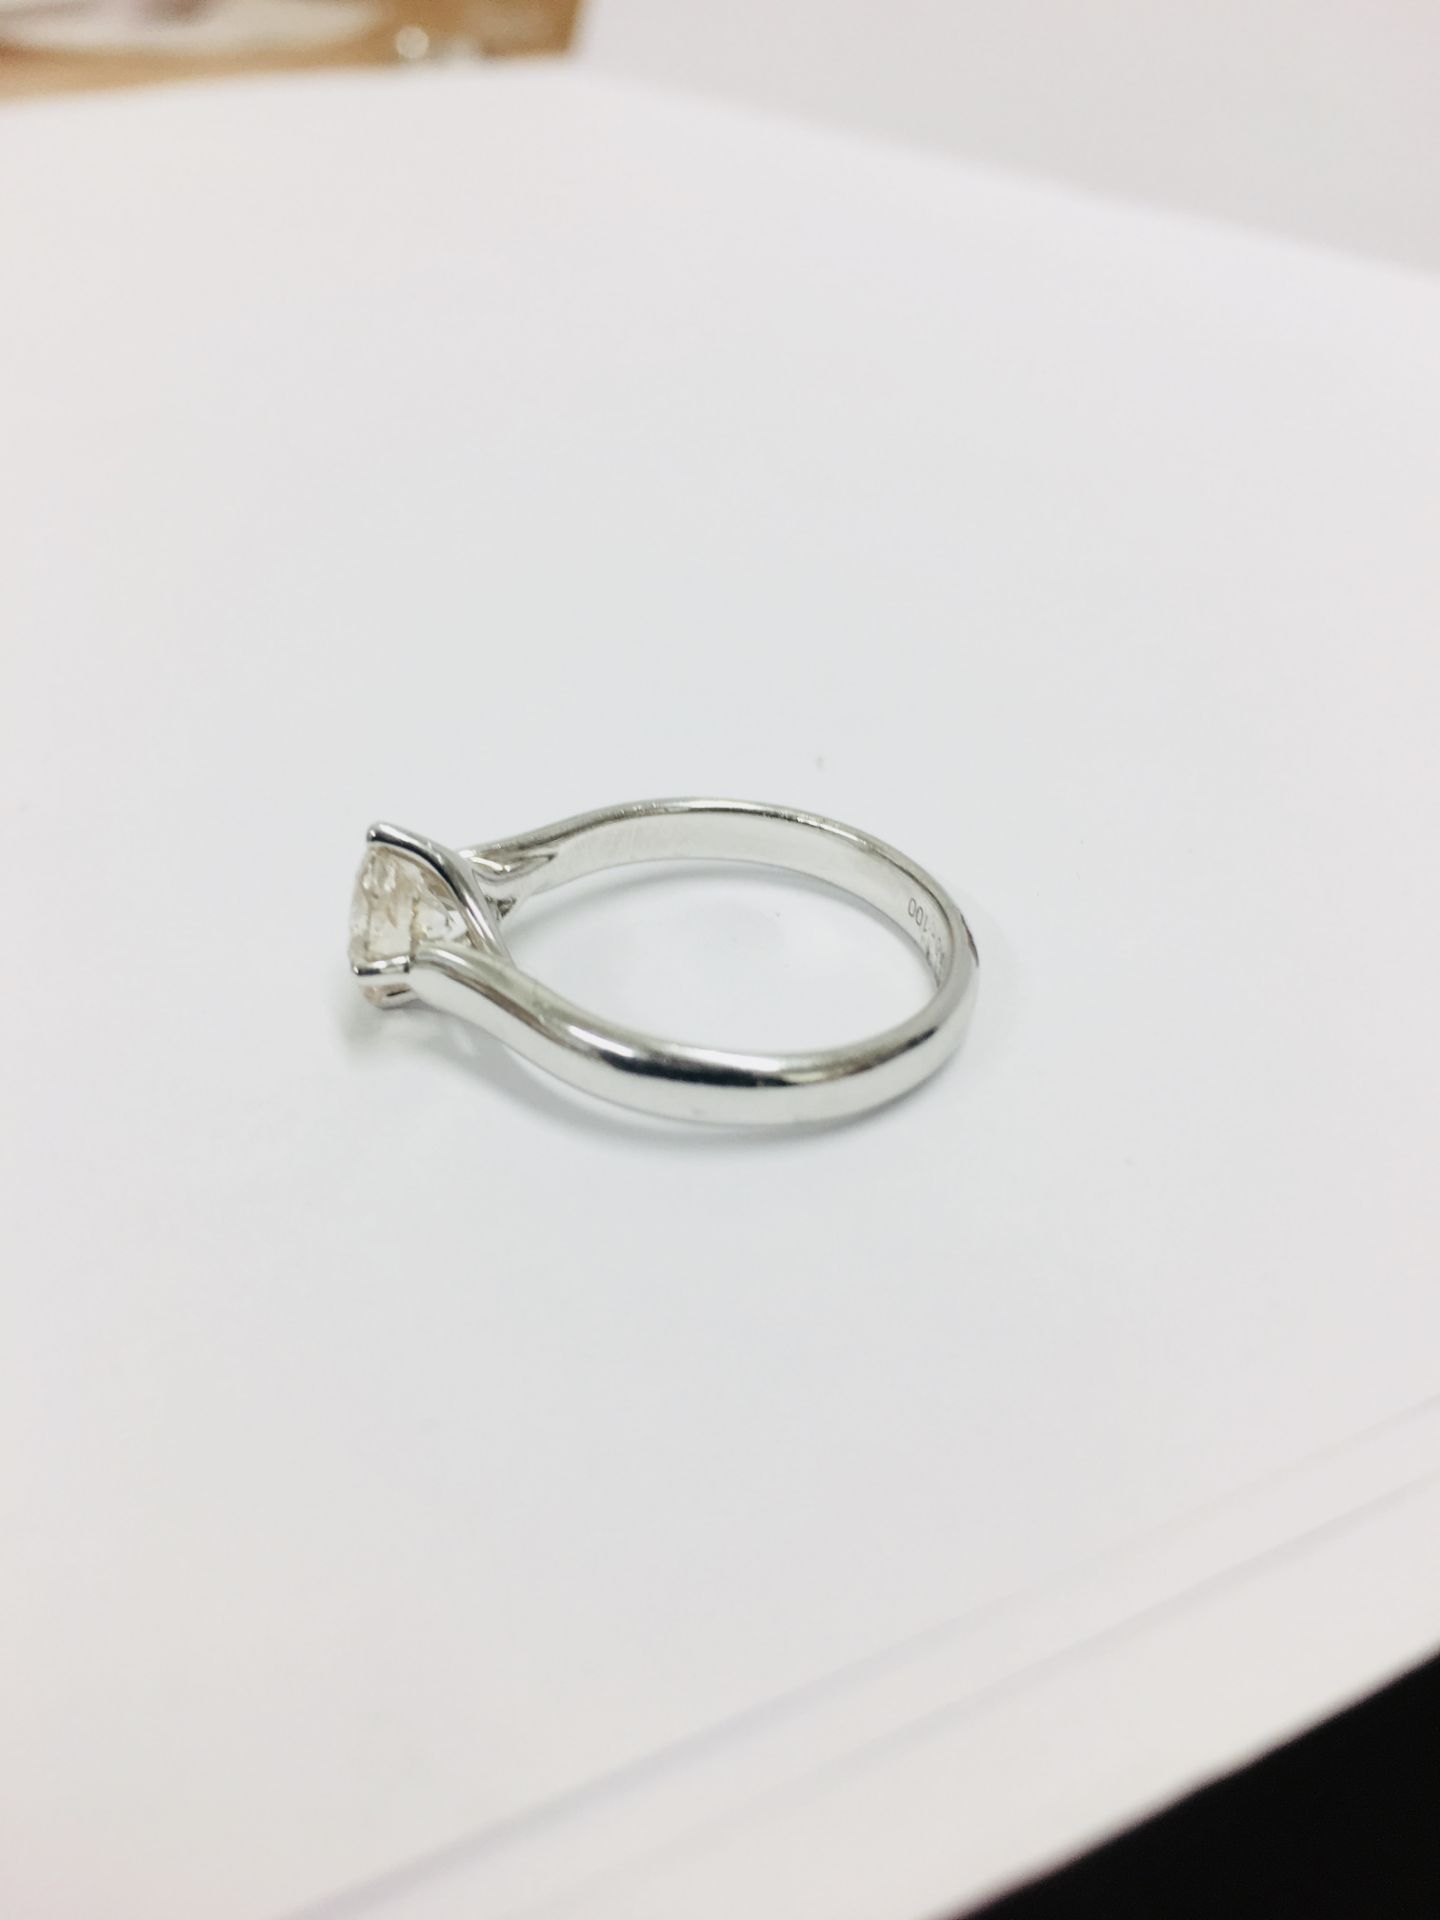 1.09ct Oval Diamond I colour and i1 larity IGI certification 28676008,platinum setting 3,2gms size - Image 2 of 6